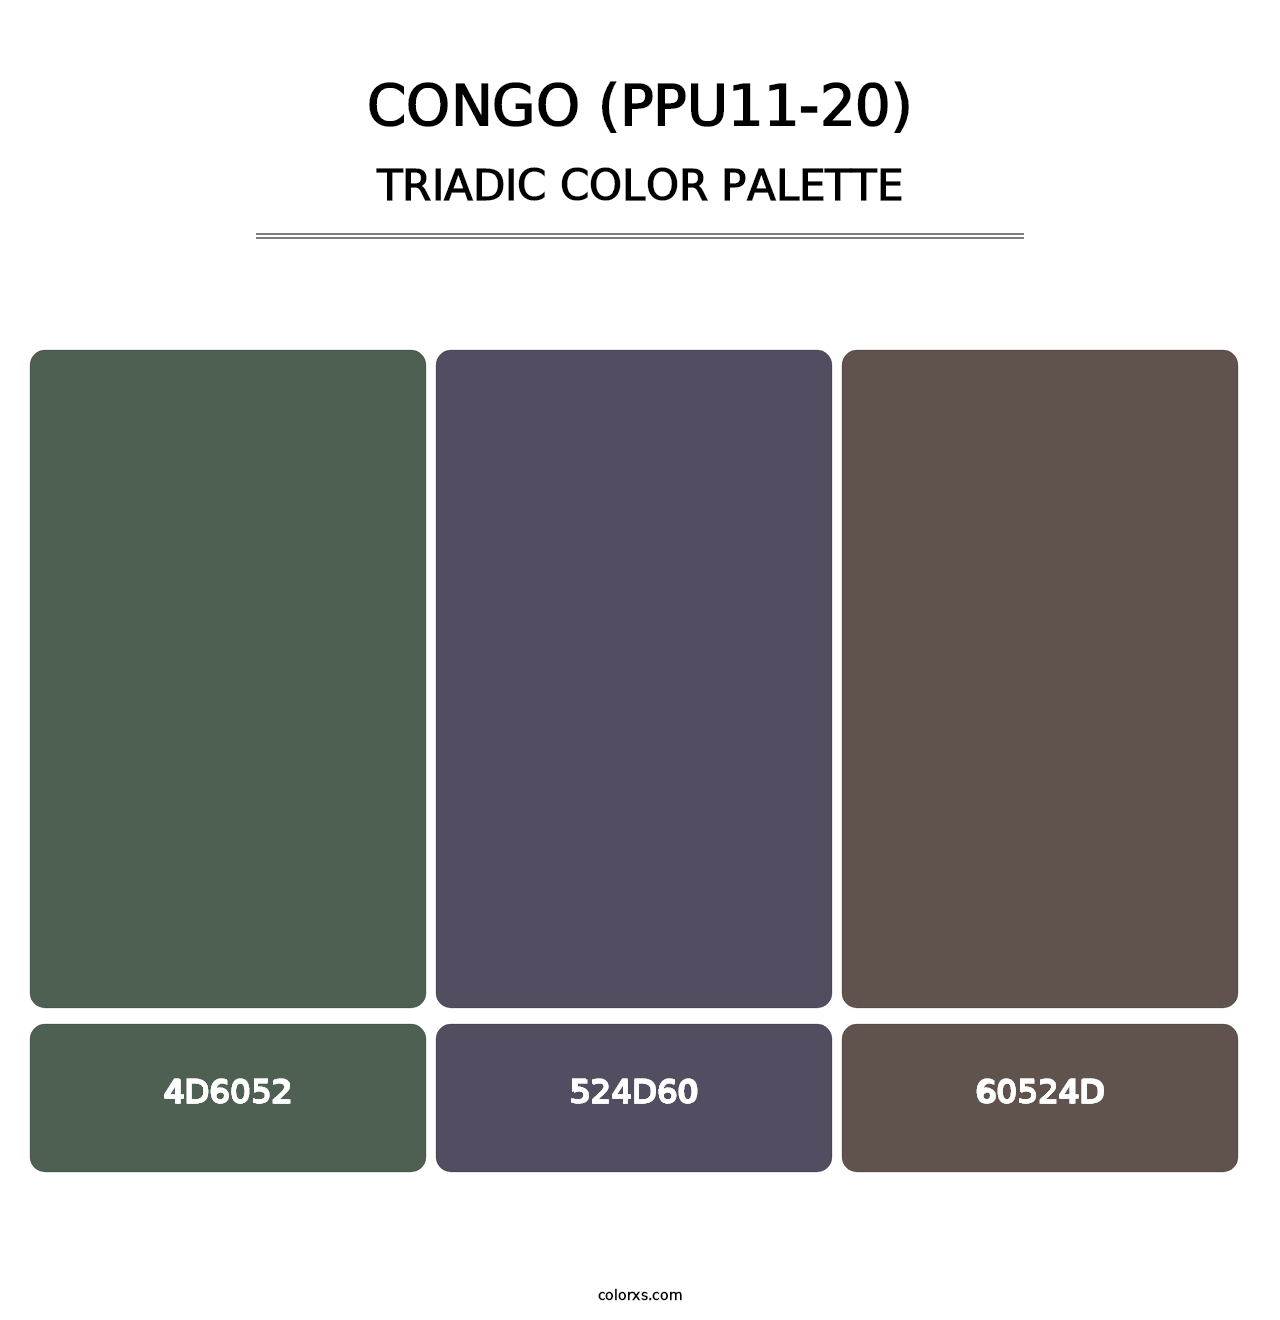 Congo (PPU11-20) - Triadic Color Palette